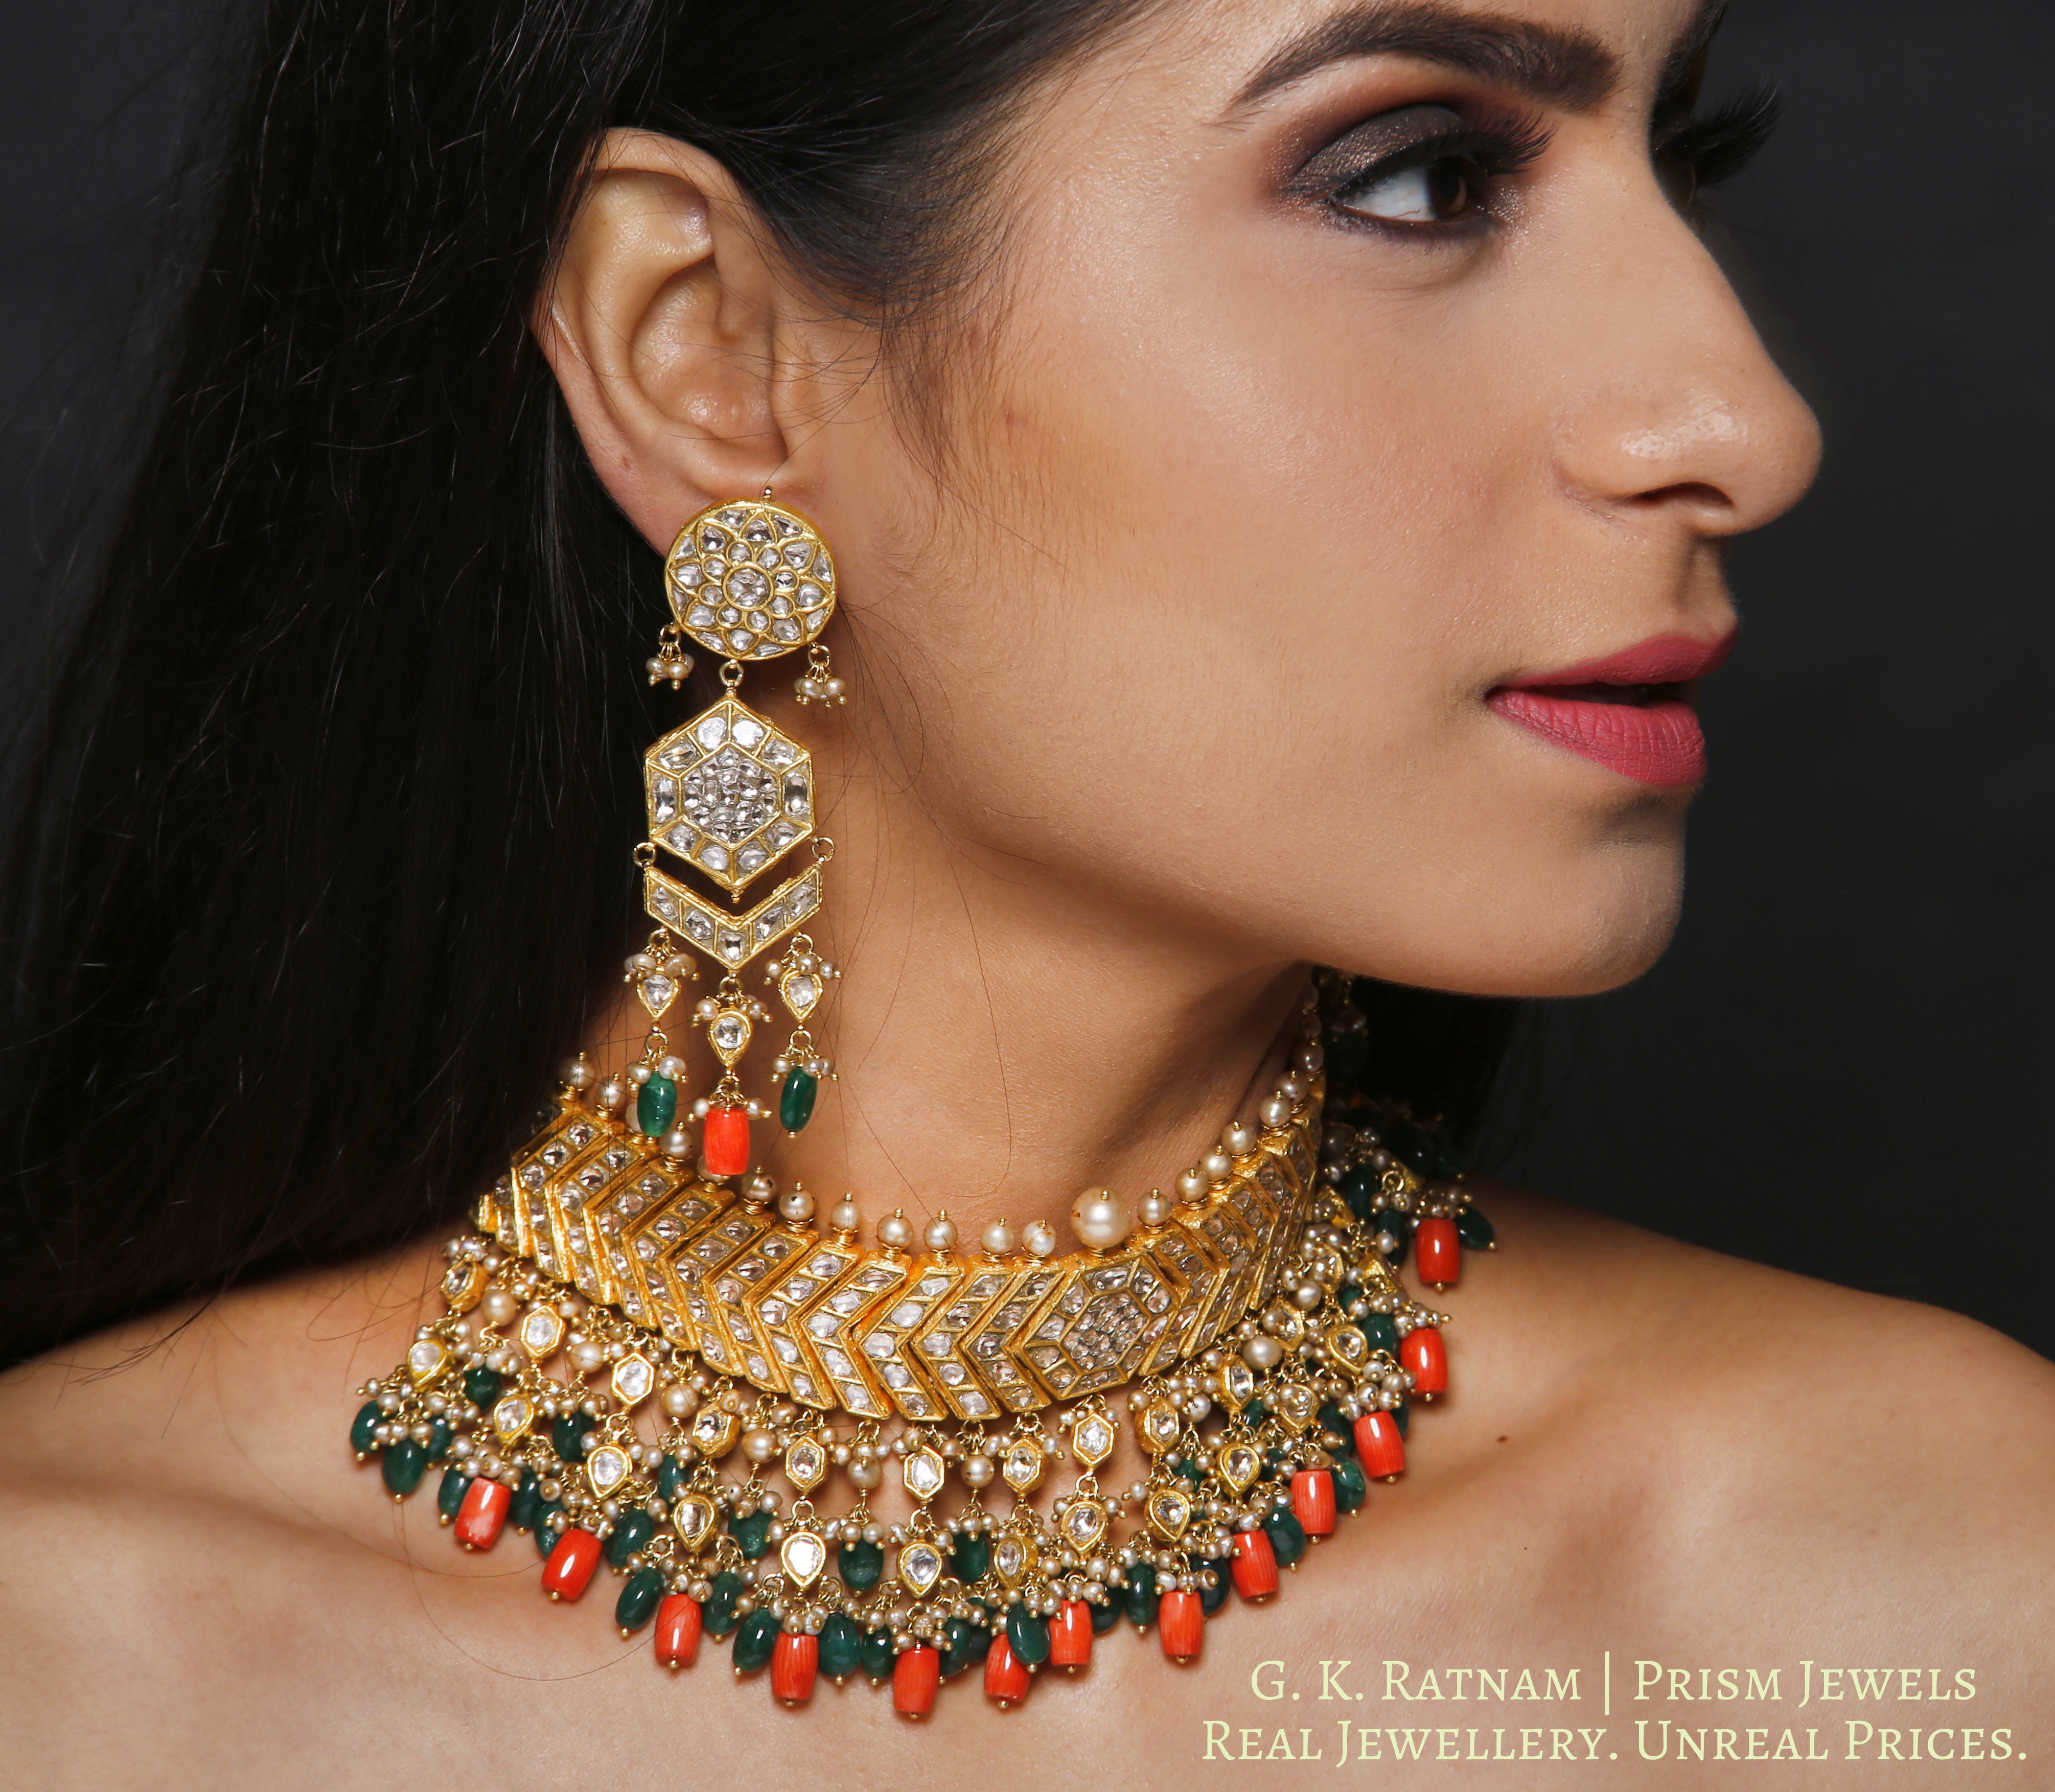 23k Gold and Diamond Polki Choker Necklace Set with Corals, Beryls and Antiqued Hyderabadi Pearls - gold diamond polki kundan meena jadau jewellery